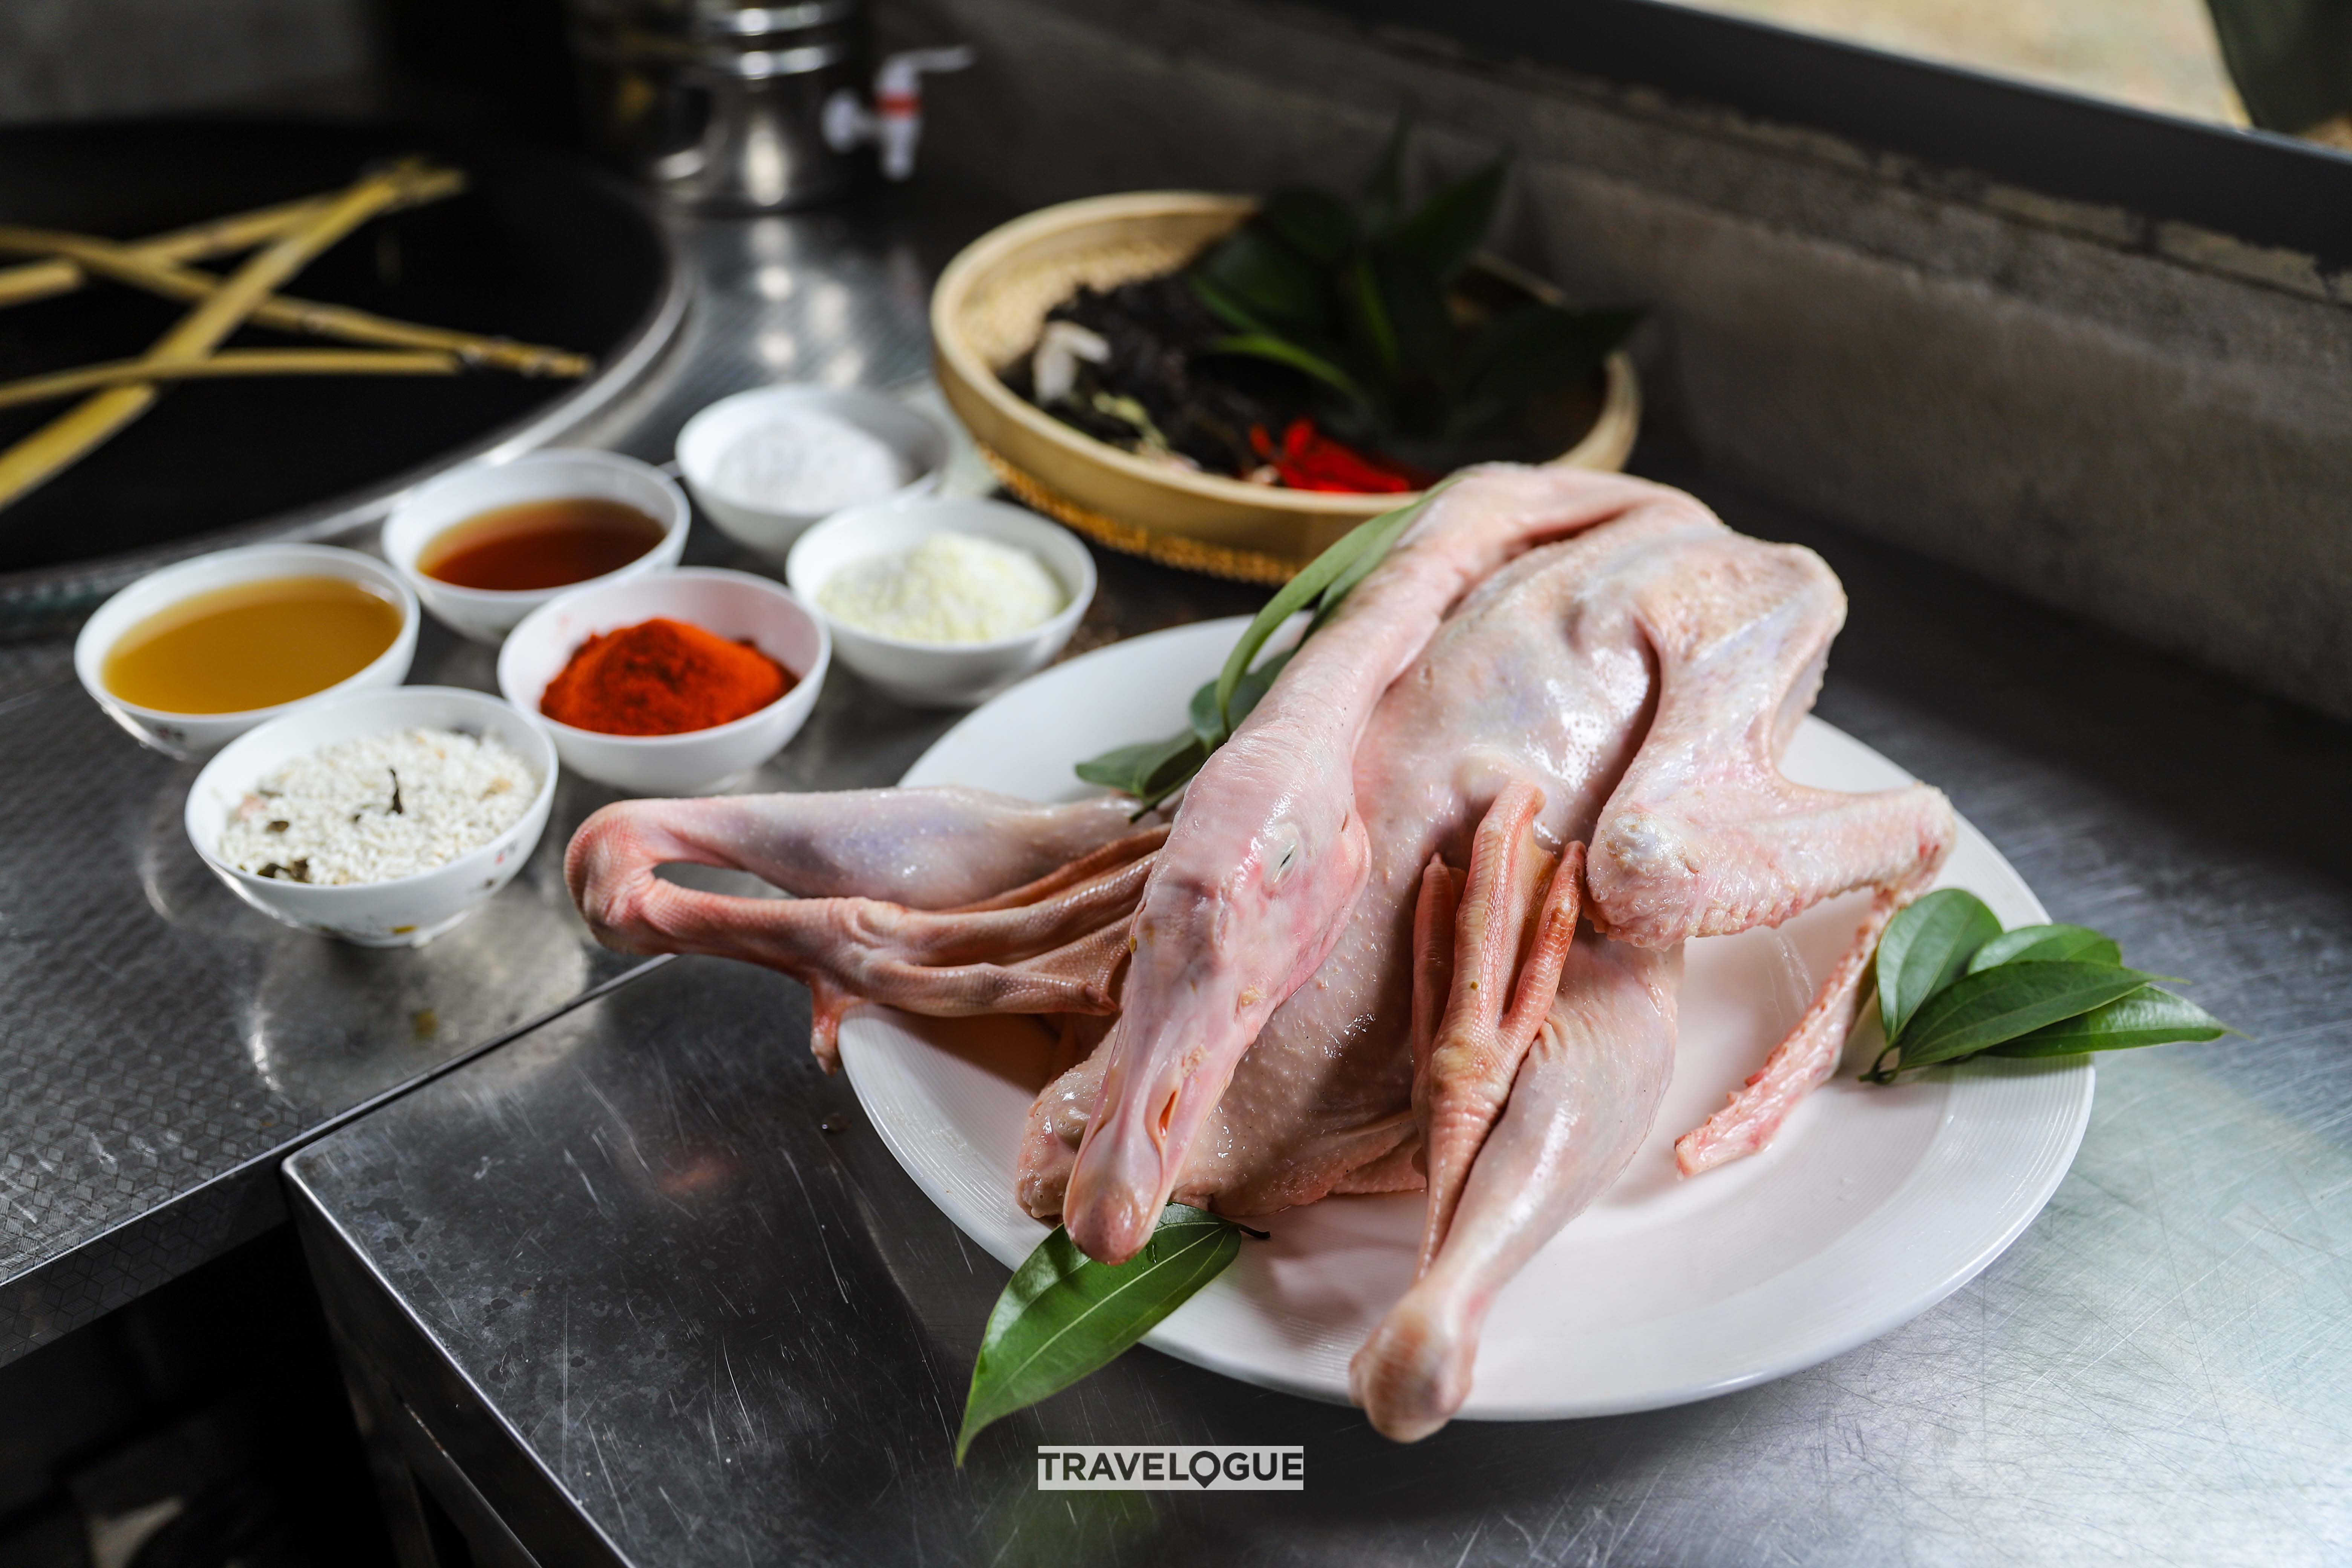 Ingredients for Wuyi Mountains smoked goose /CGTN